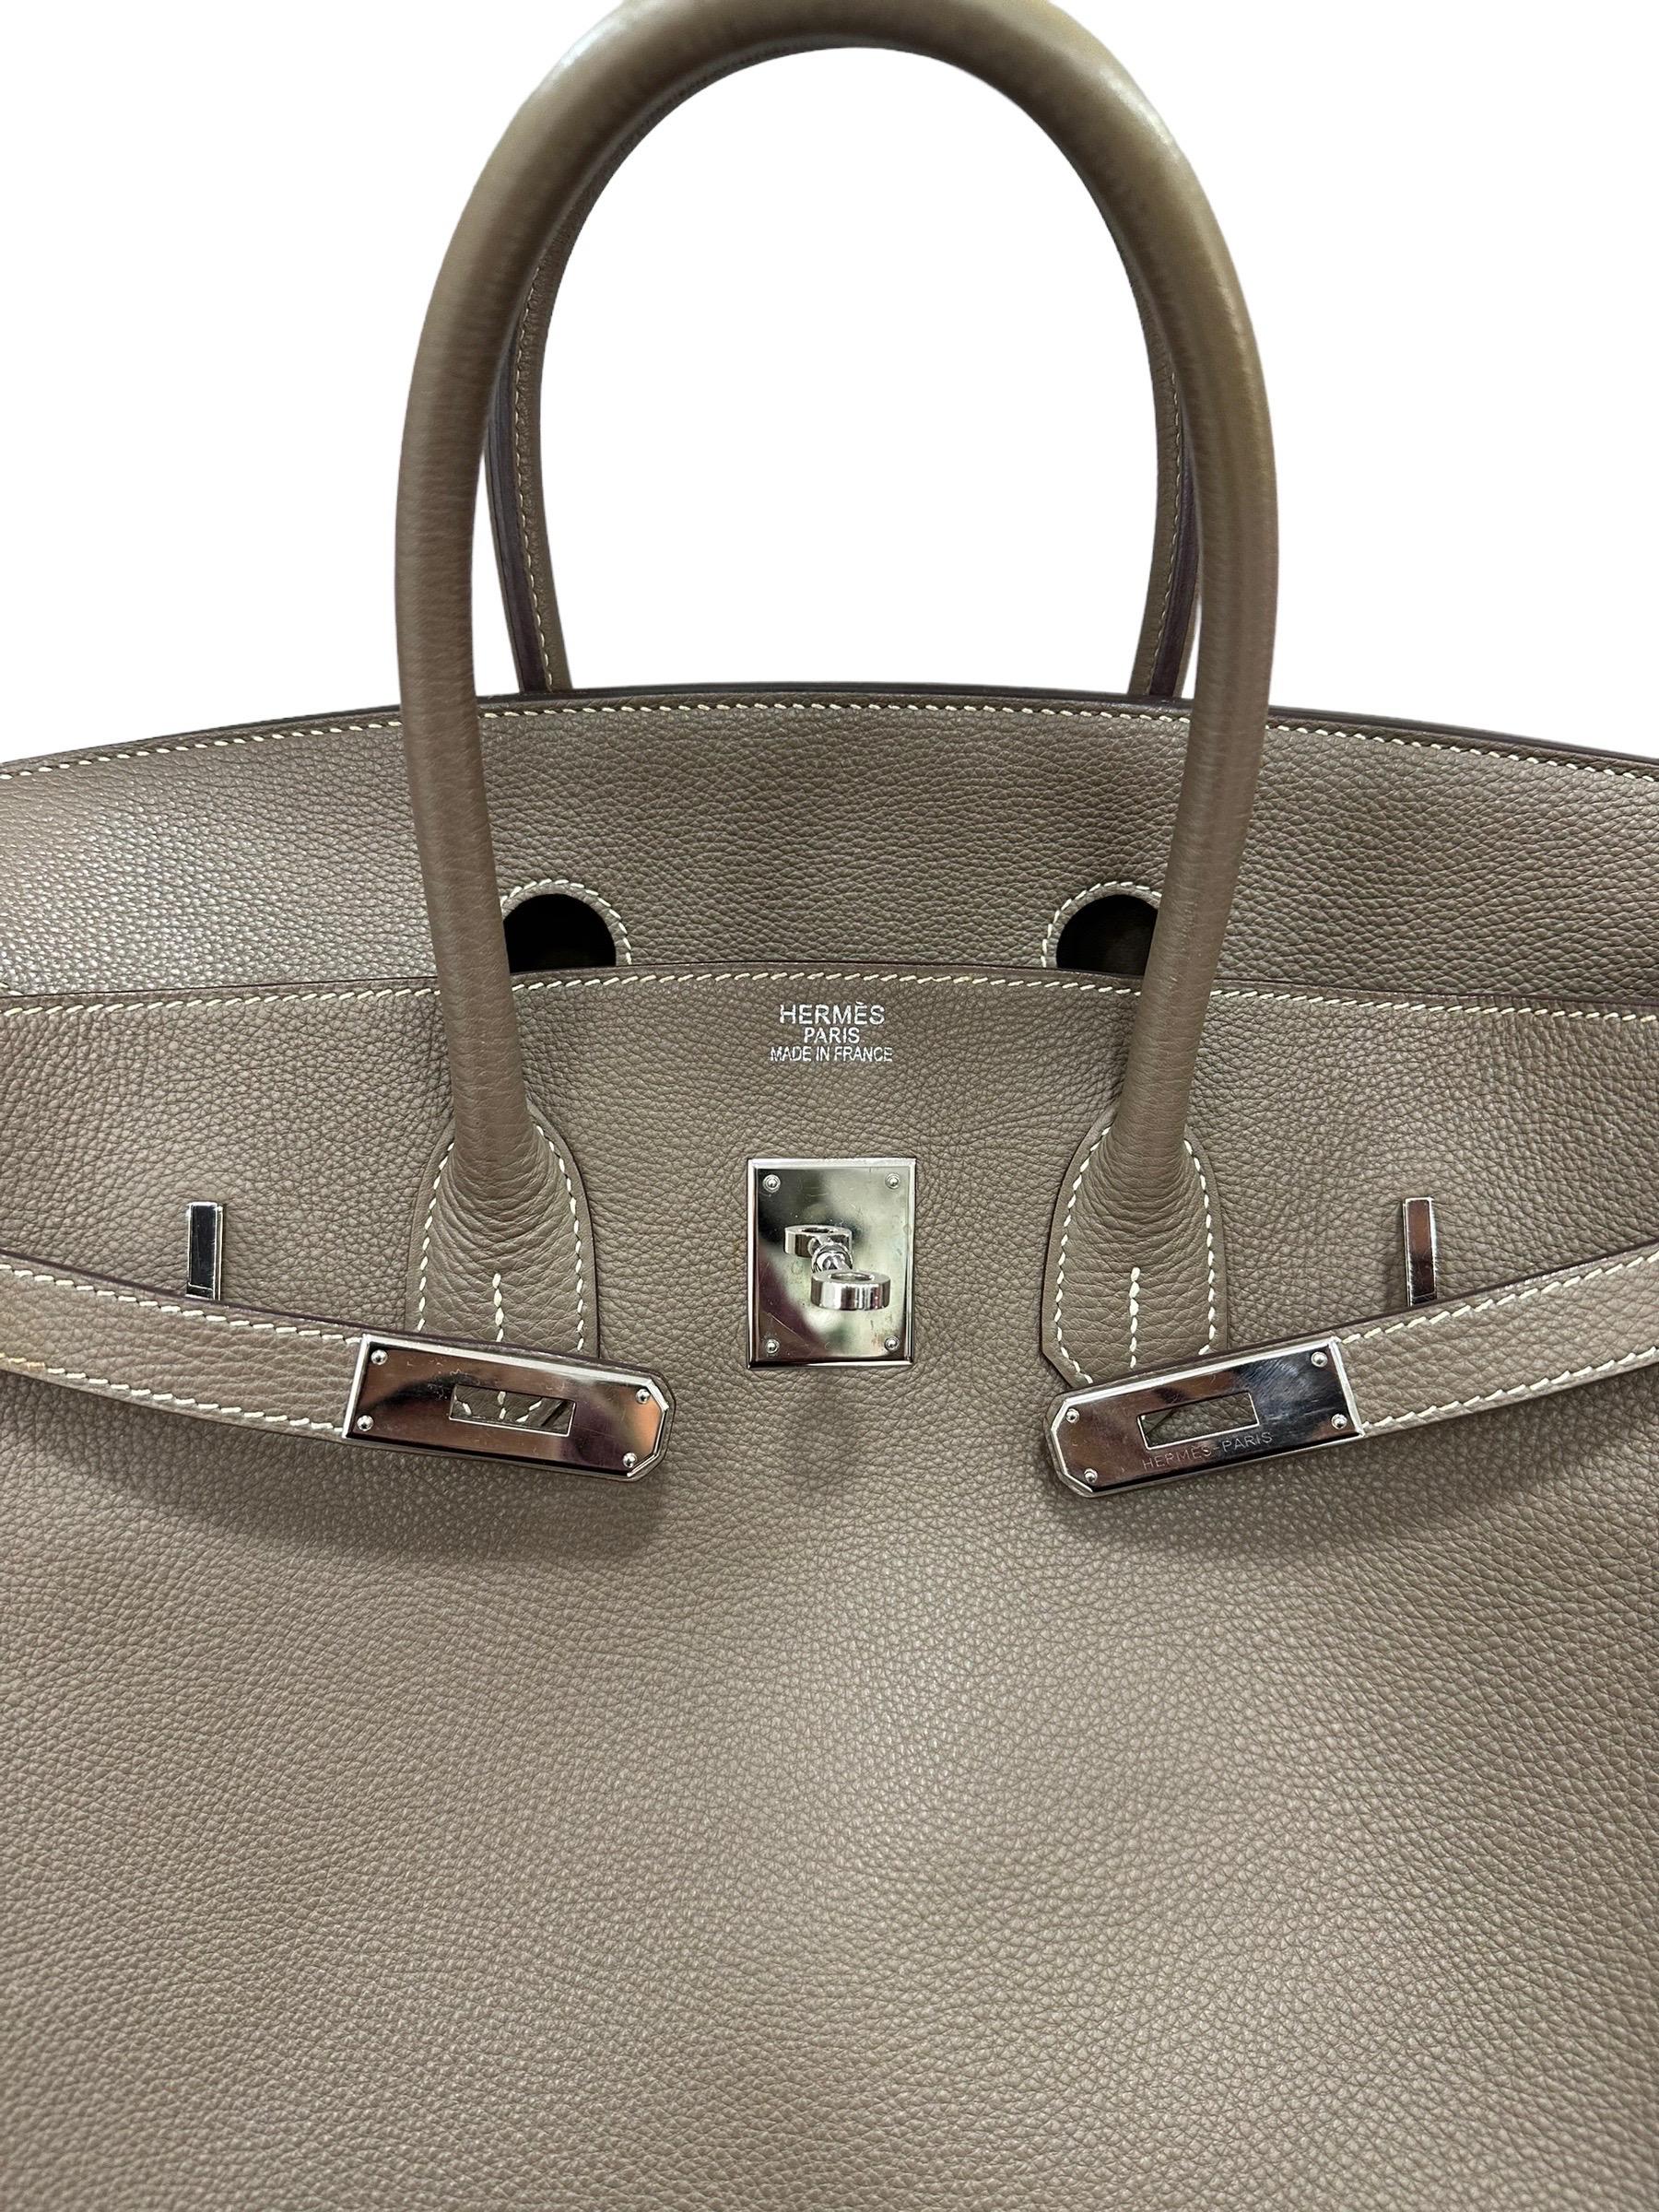 2008 Hermès Birkin 35 Togo Leather Toundra Top Handle Bag For Sale 8